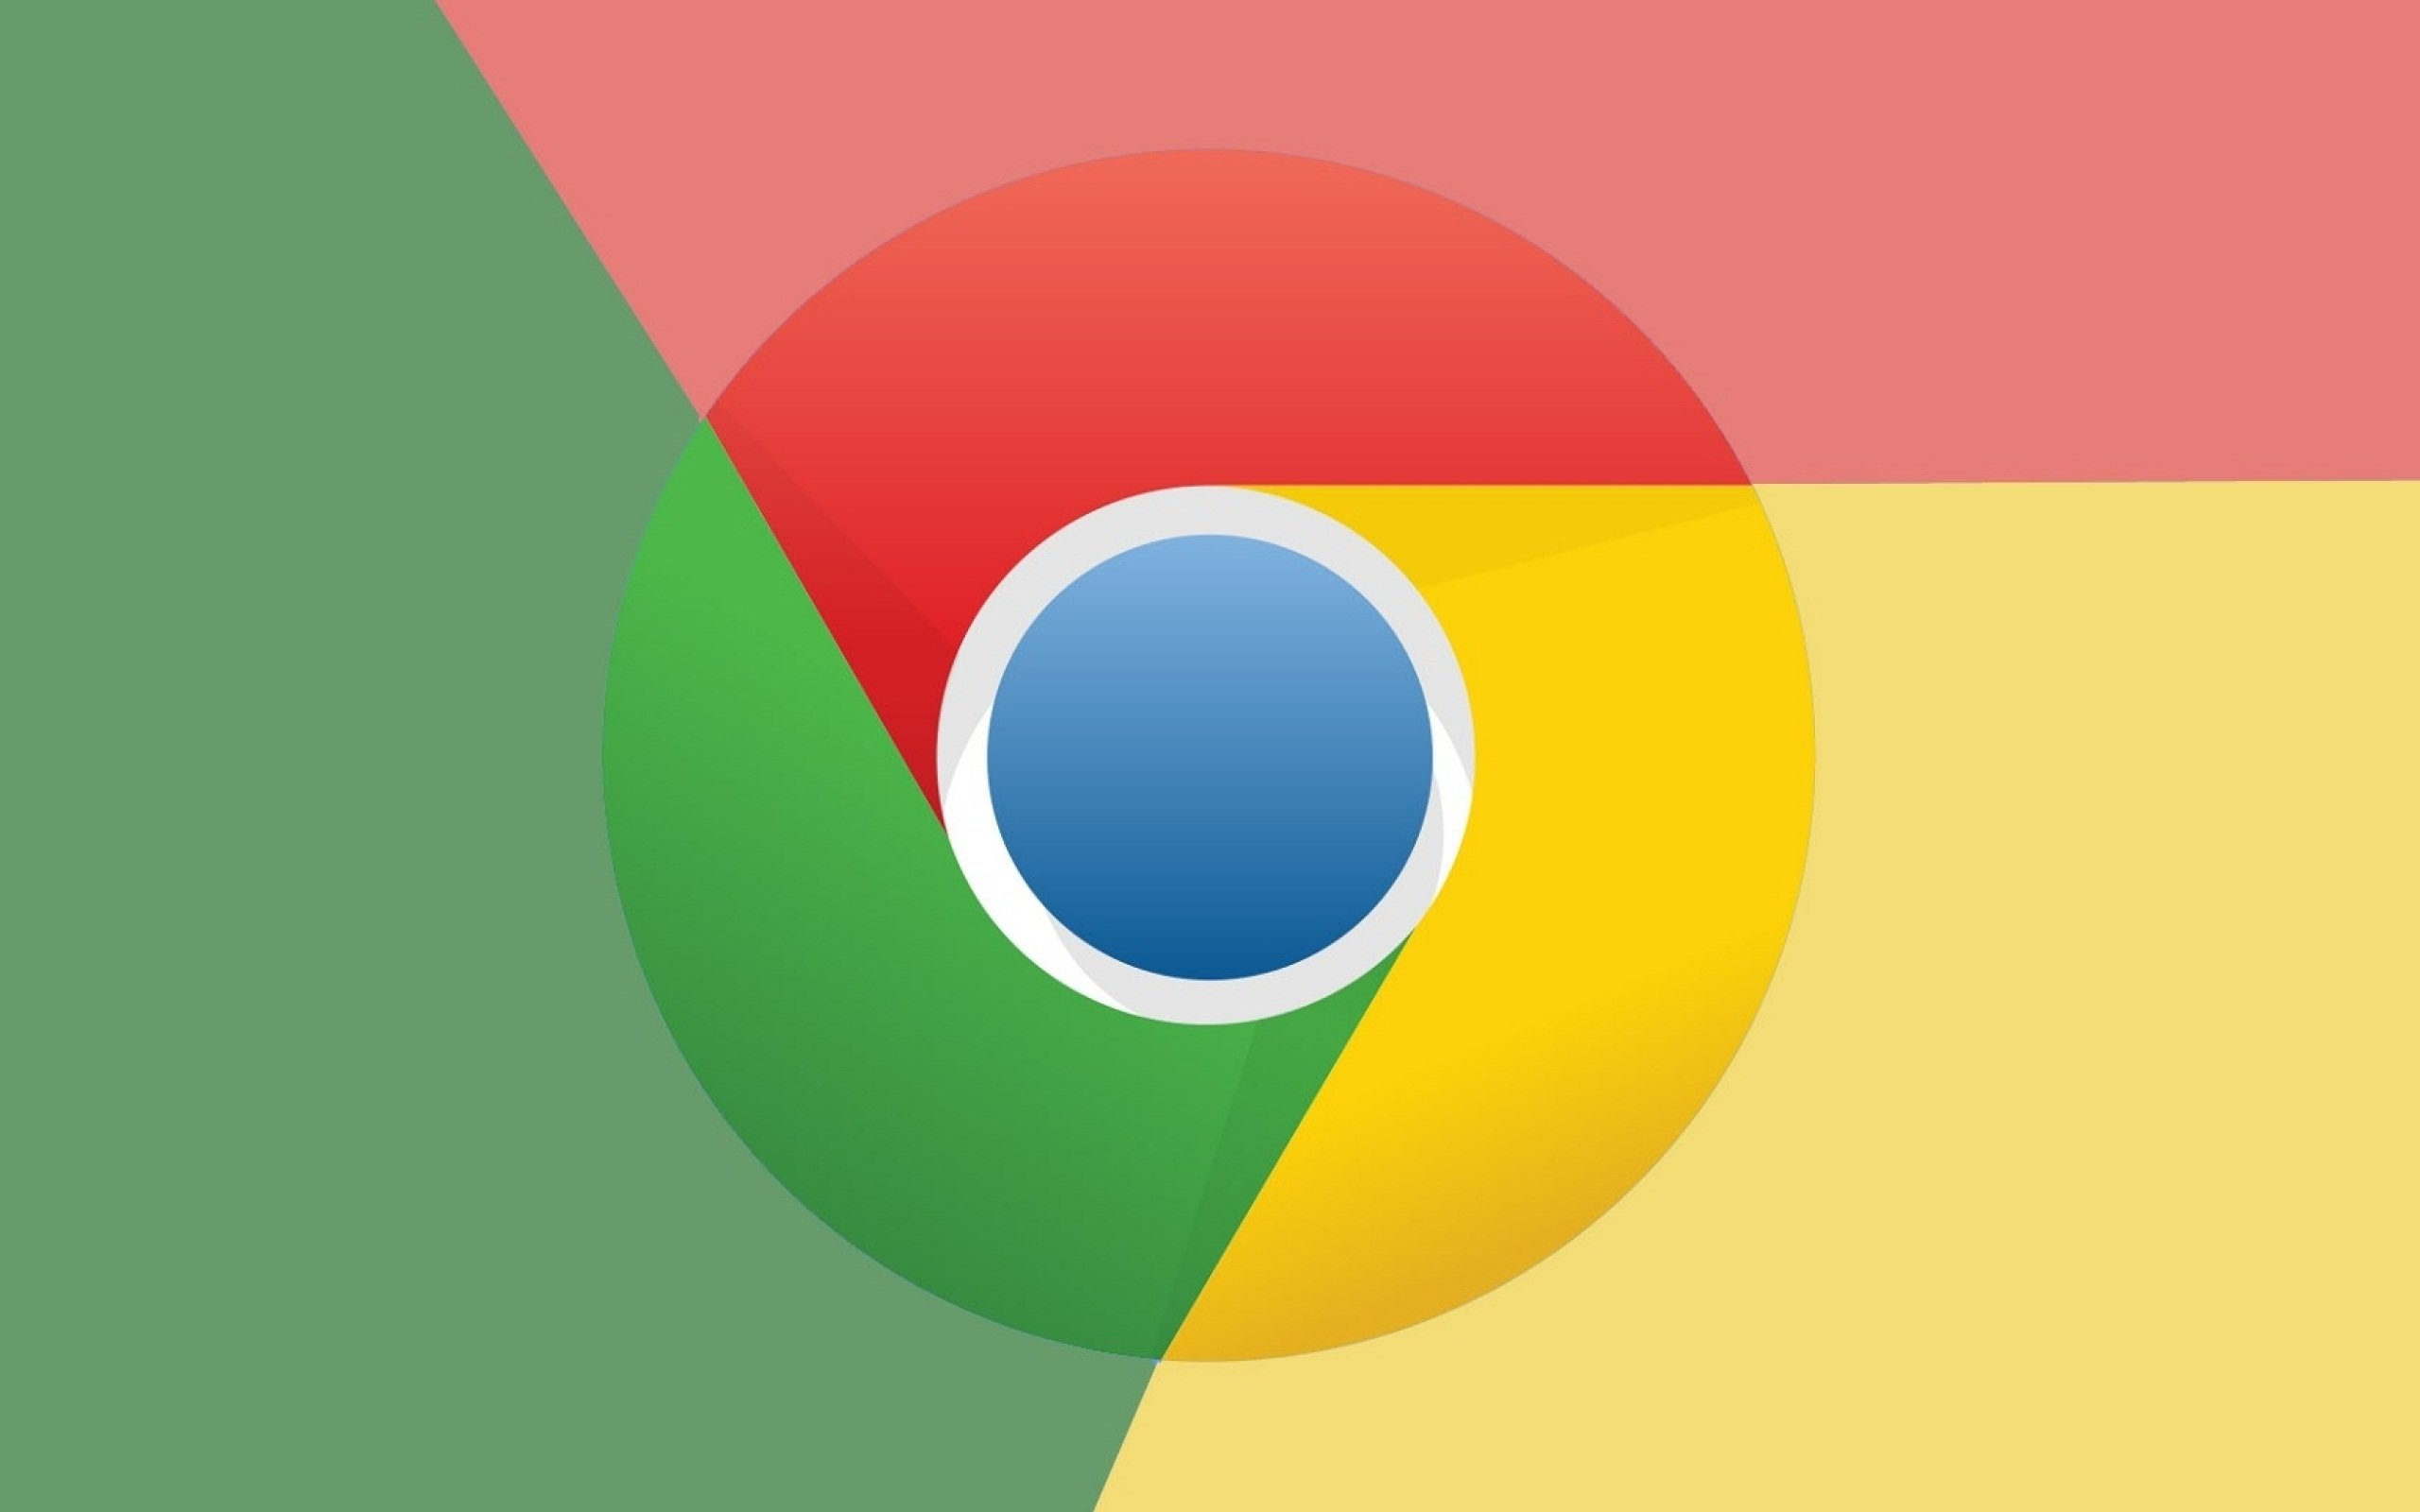 Google Chrome version 66